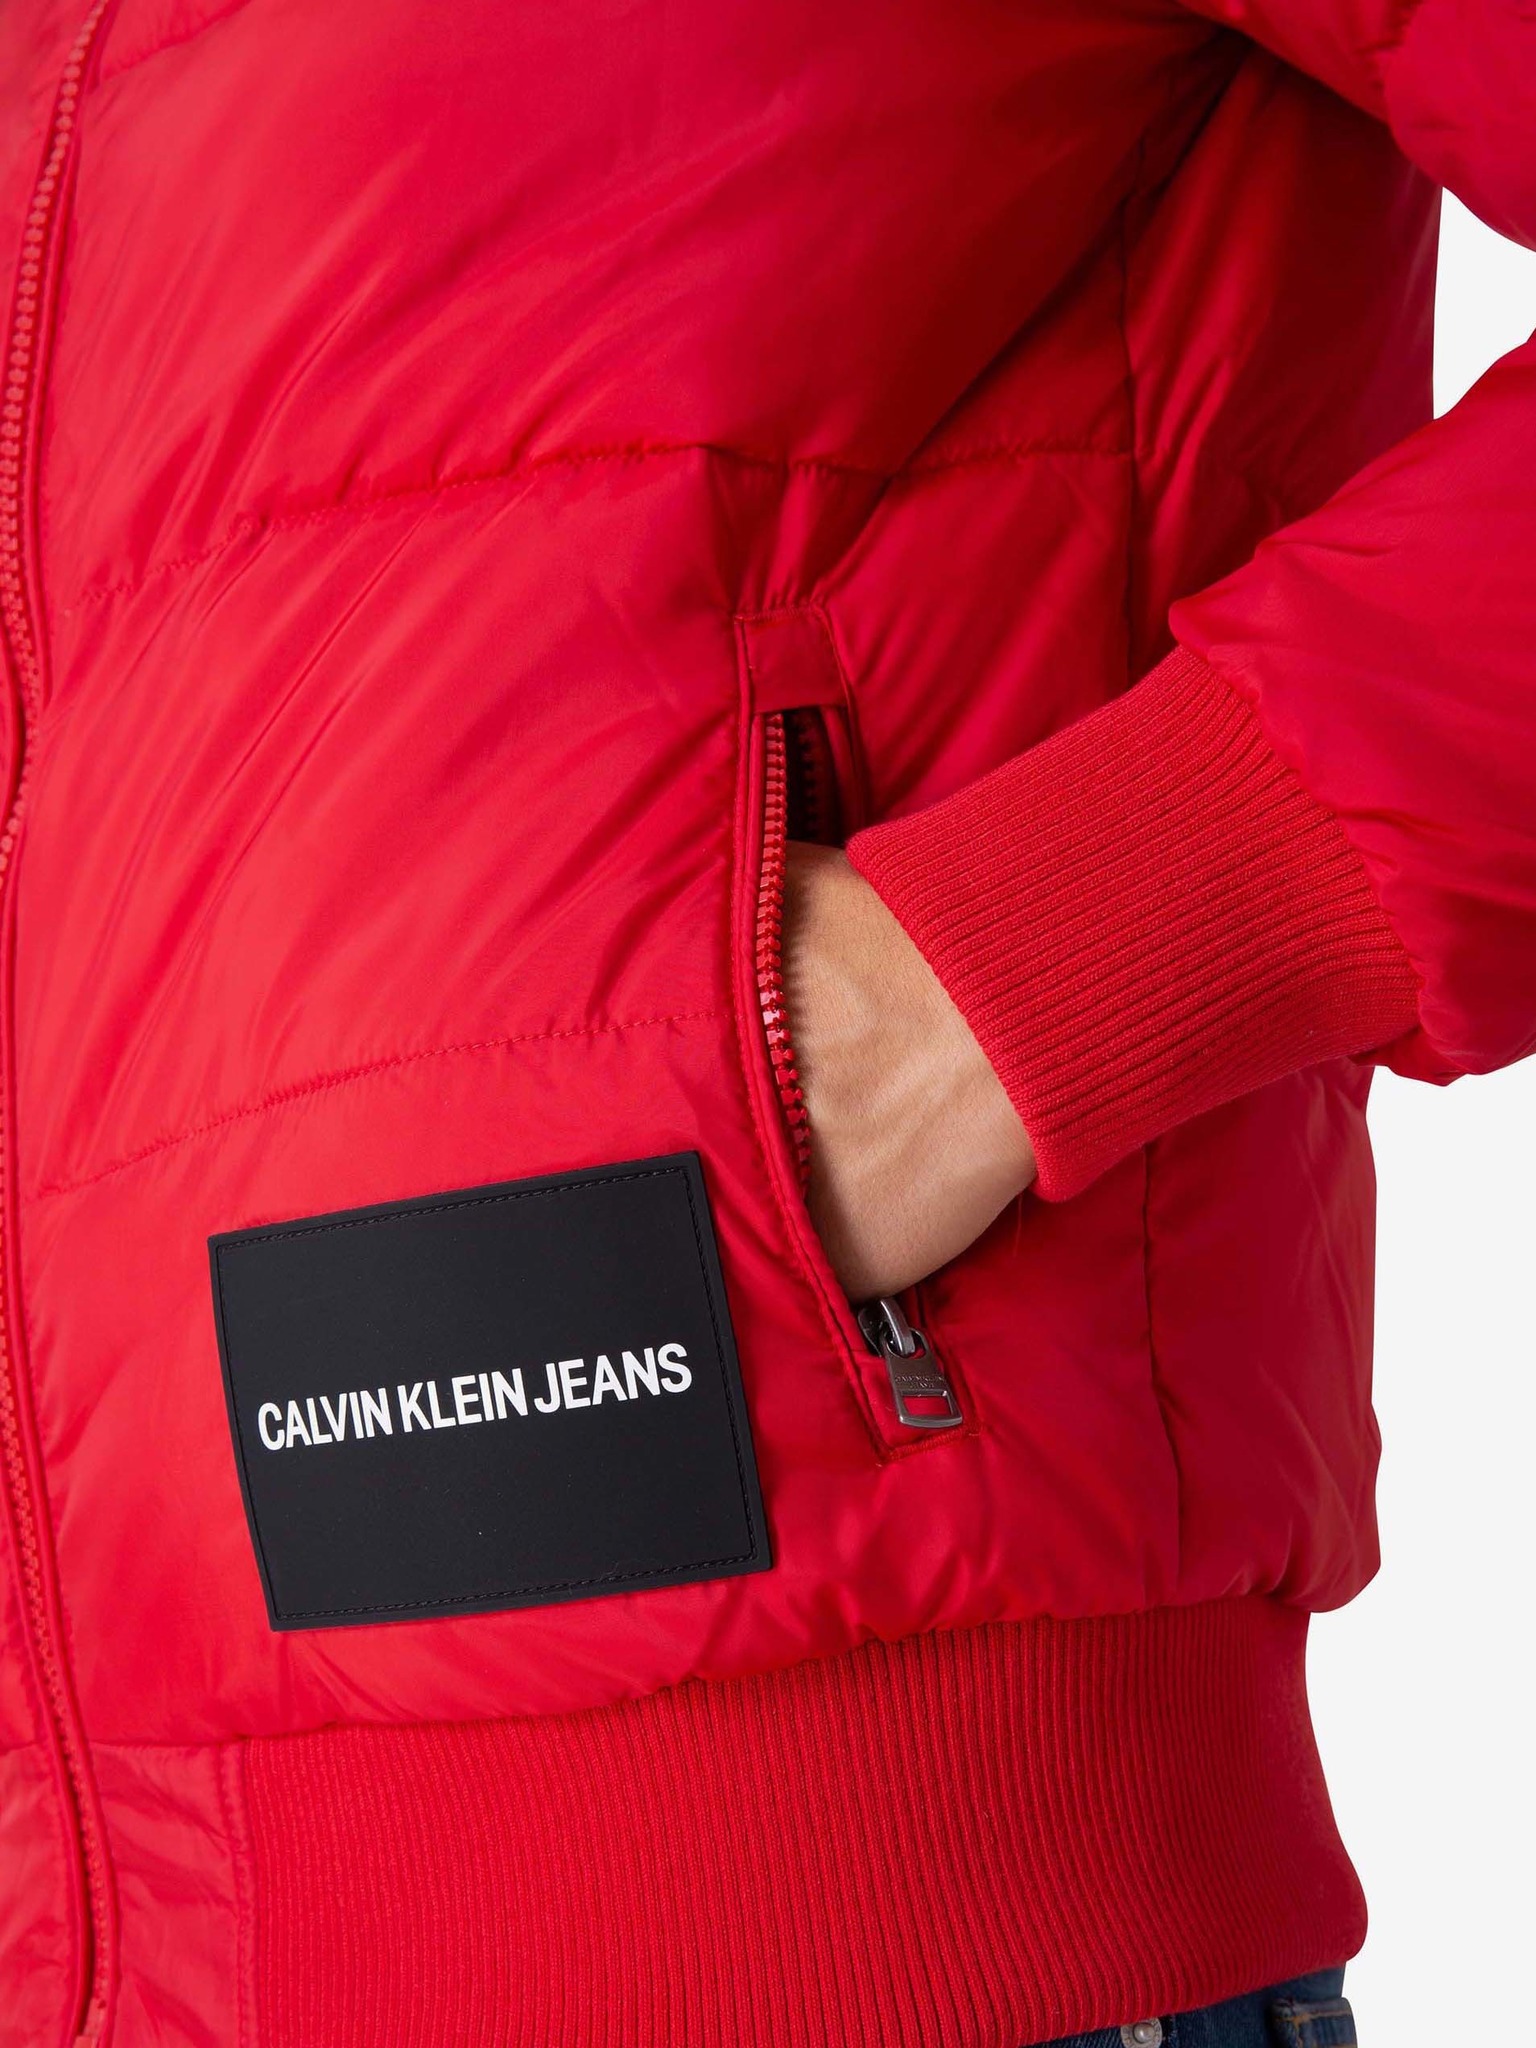 Calvin Klein  Jackets  Coats  8s Calvin Klein Red Acid Washed Denim Jean  Jacket Vintage  Poshmark